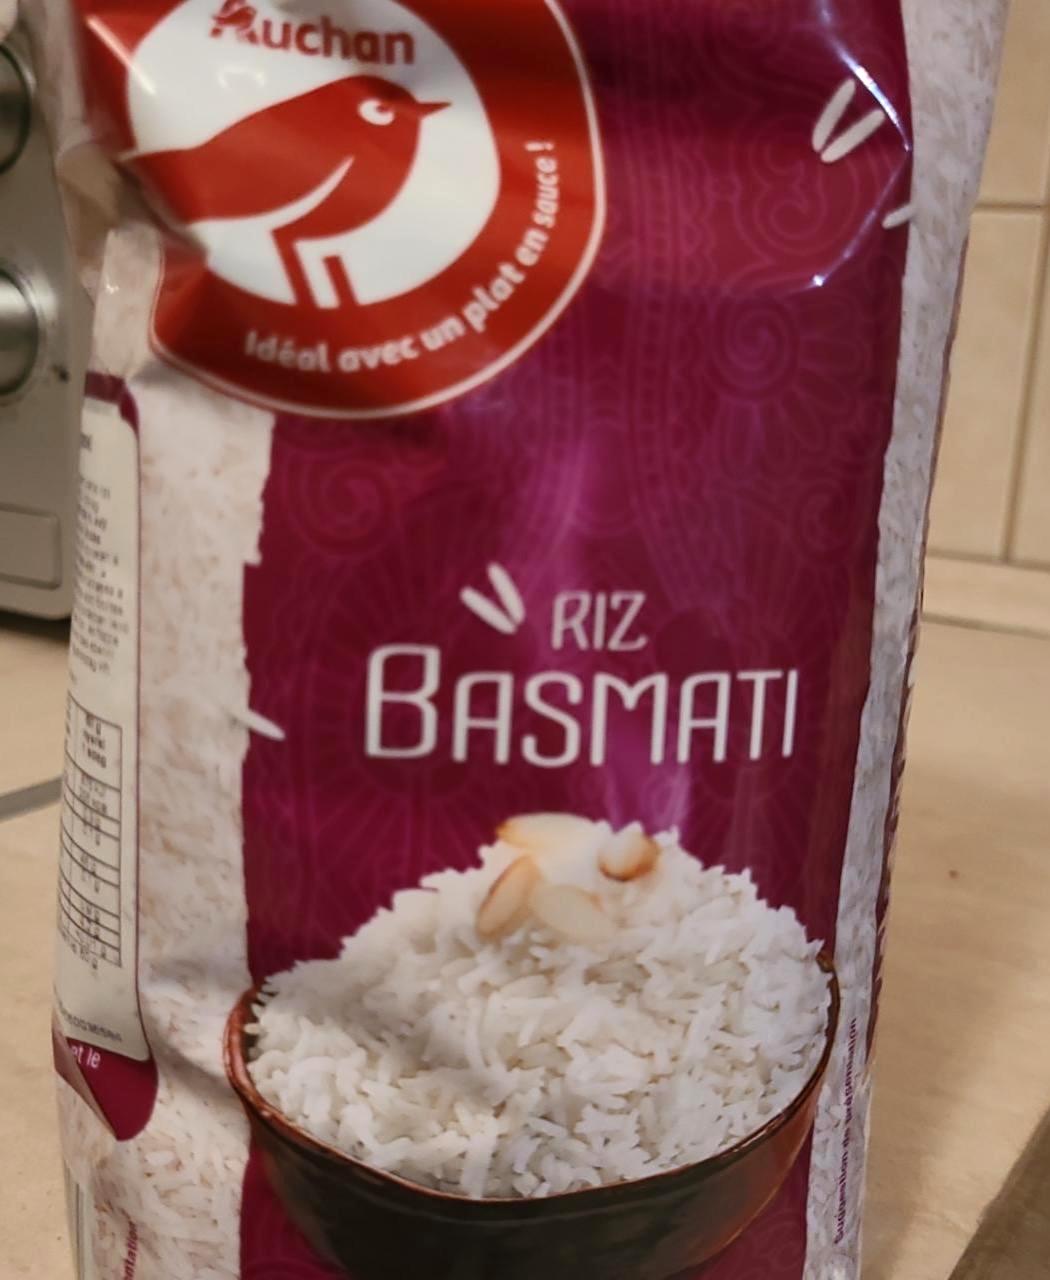 Képek - Basmati riz Auchan